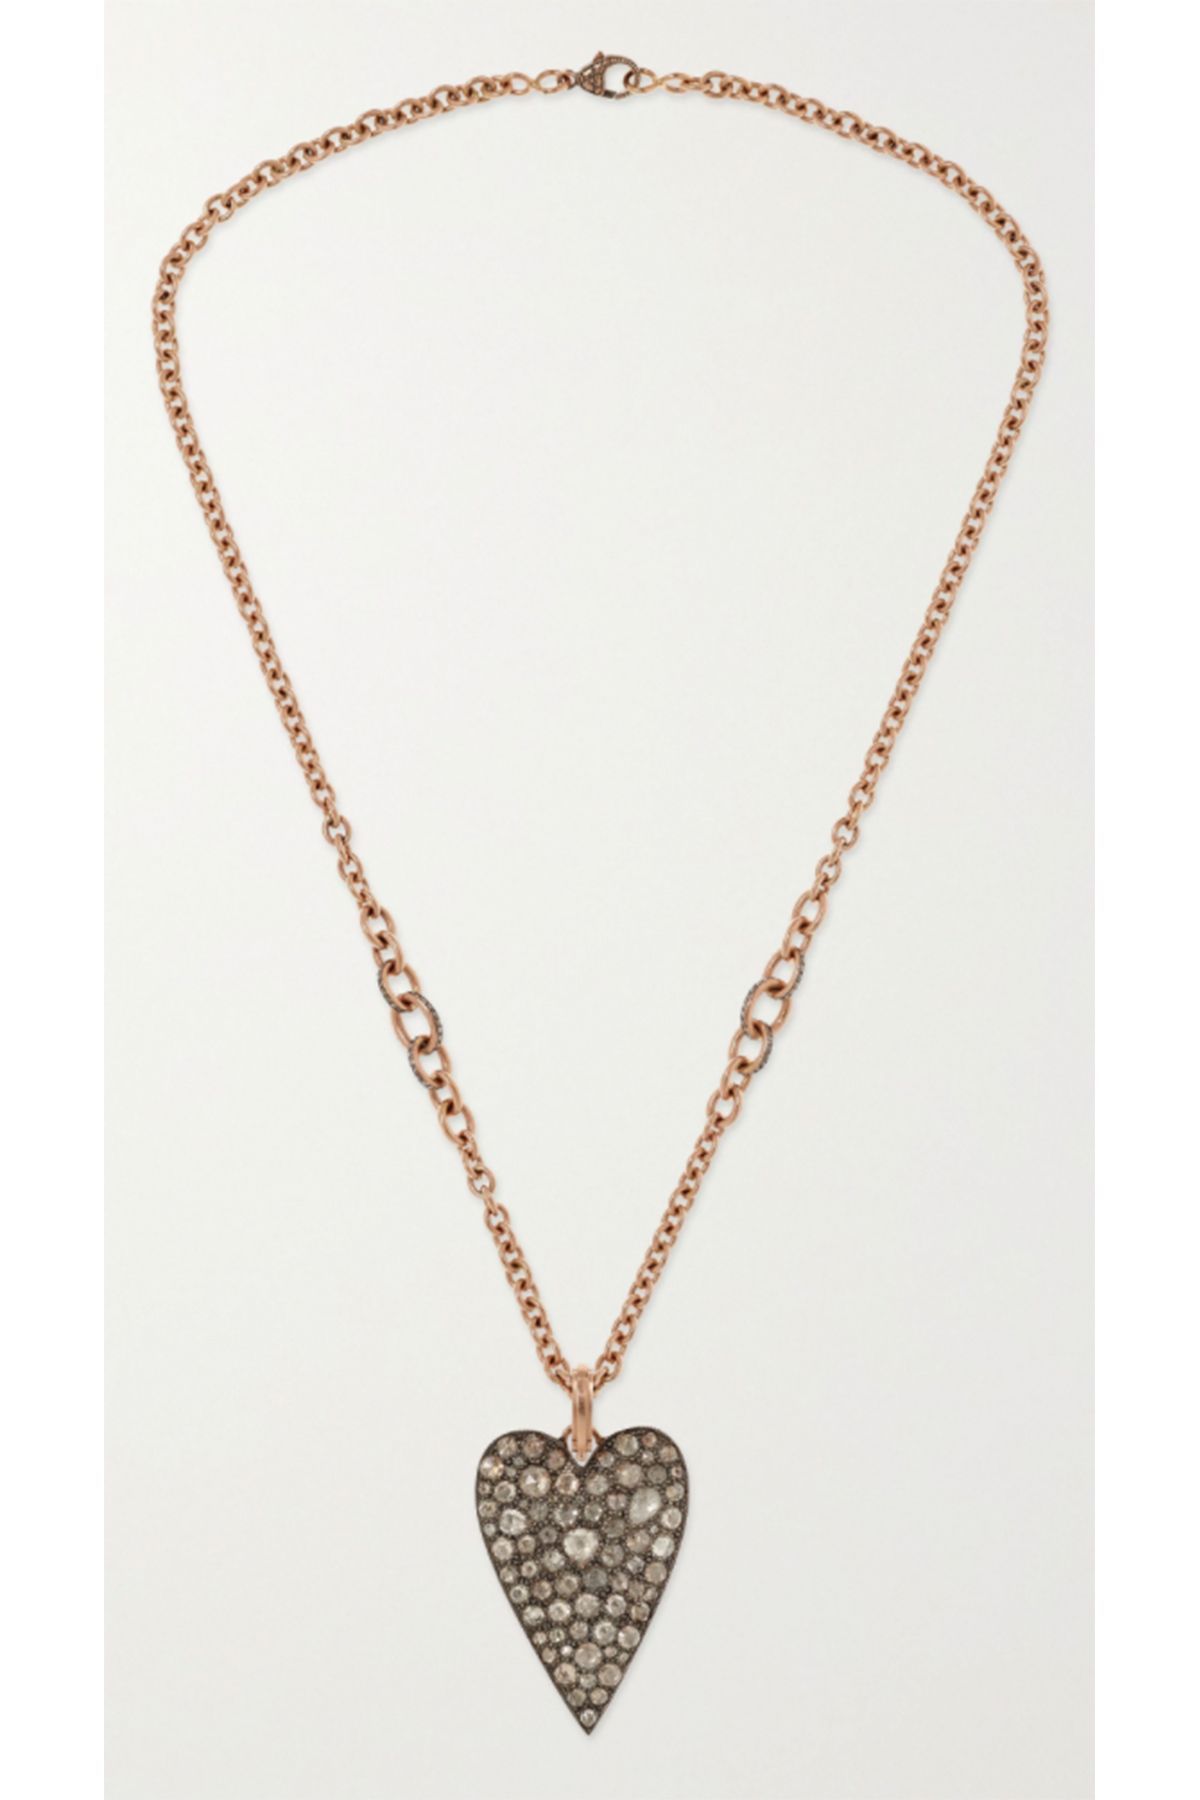 Bergort Fashion Jewelry Long Heart Pendant Necklace Chain Women Love Necklaces & Pendants Collares